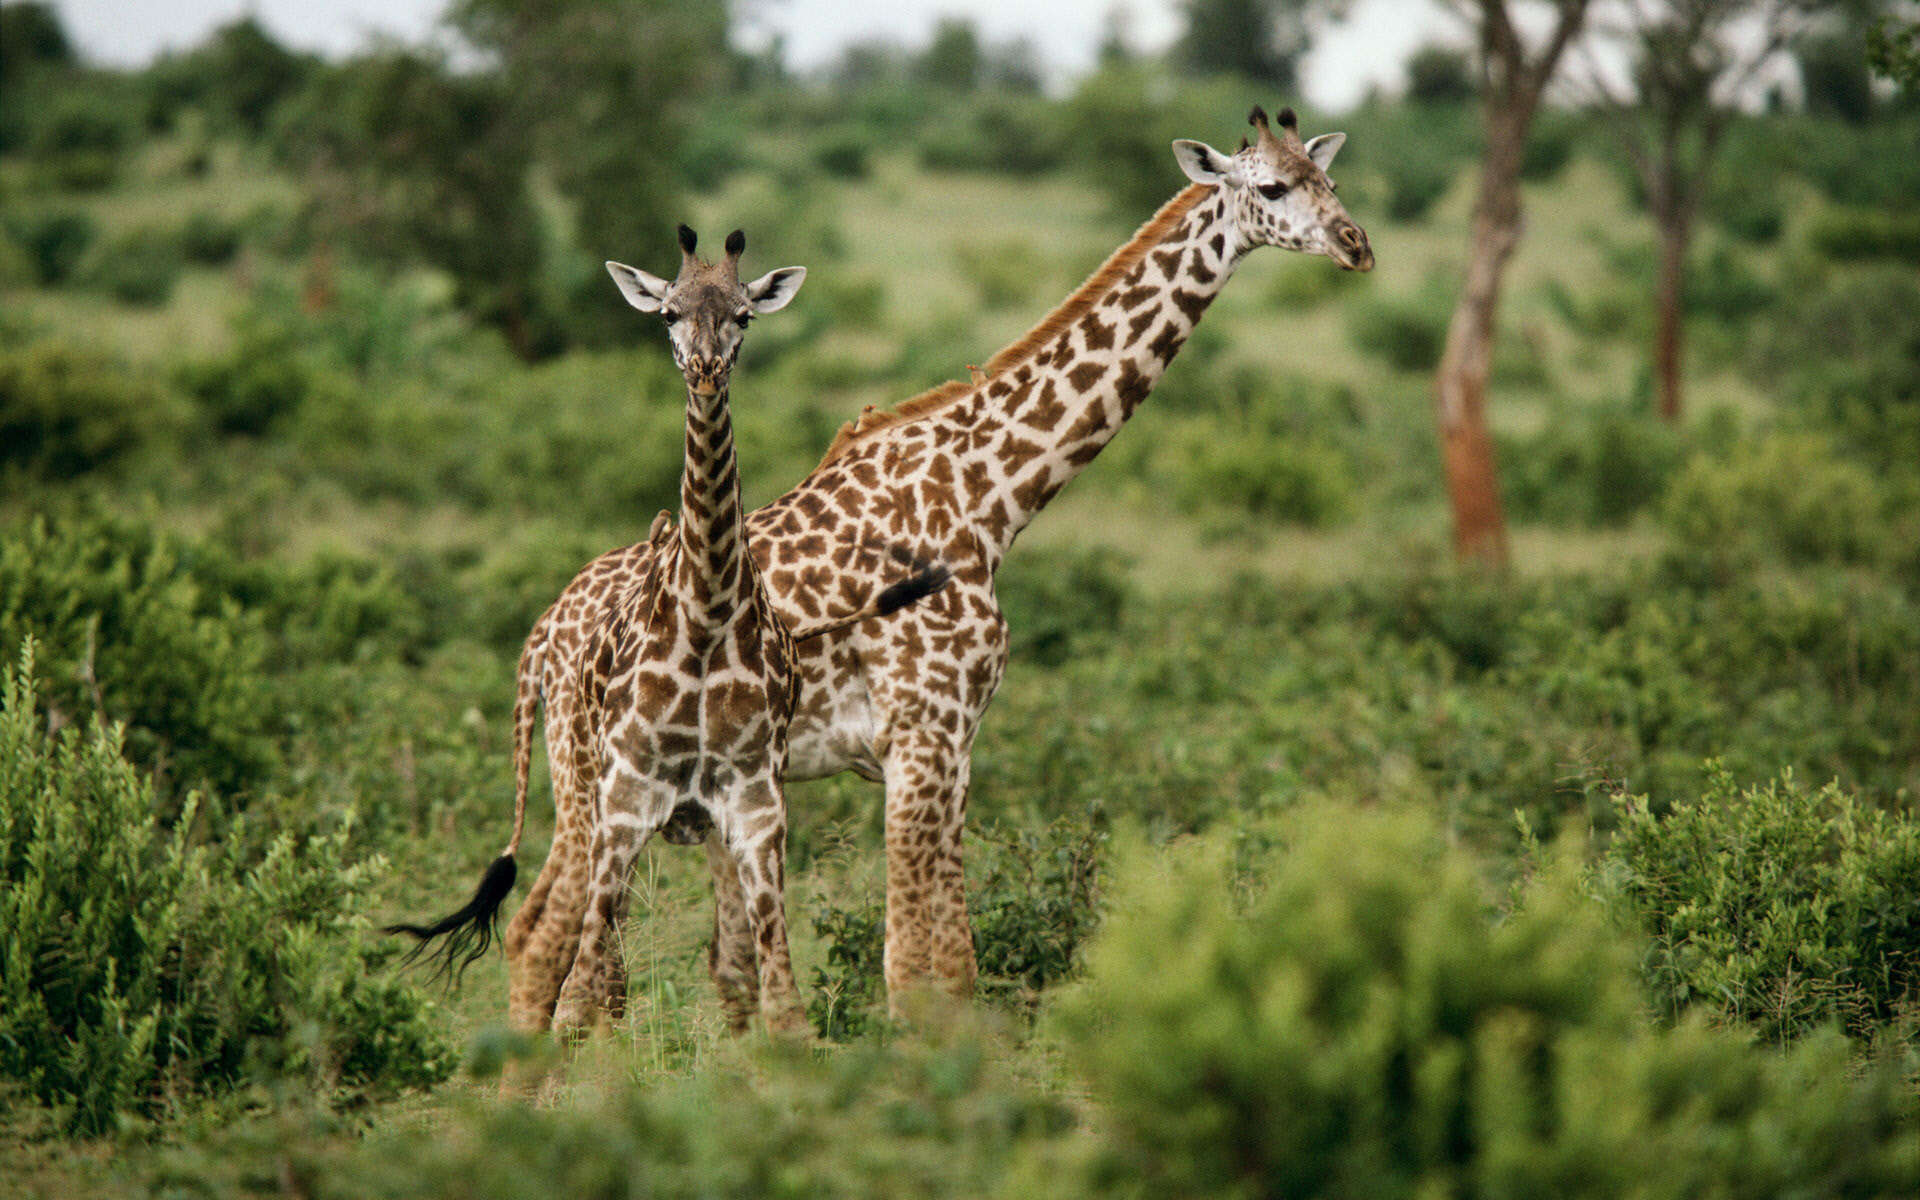 African Wildlife Desktop Wallpaper Wallpapersafari